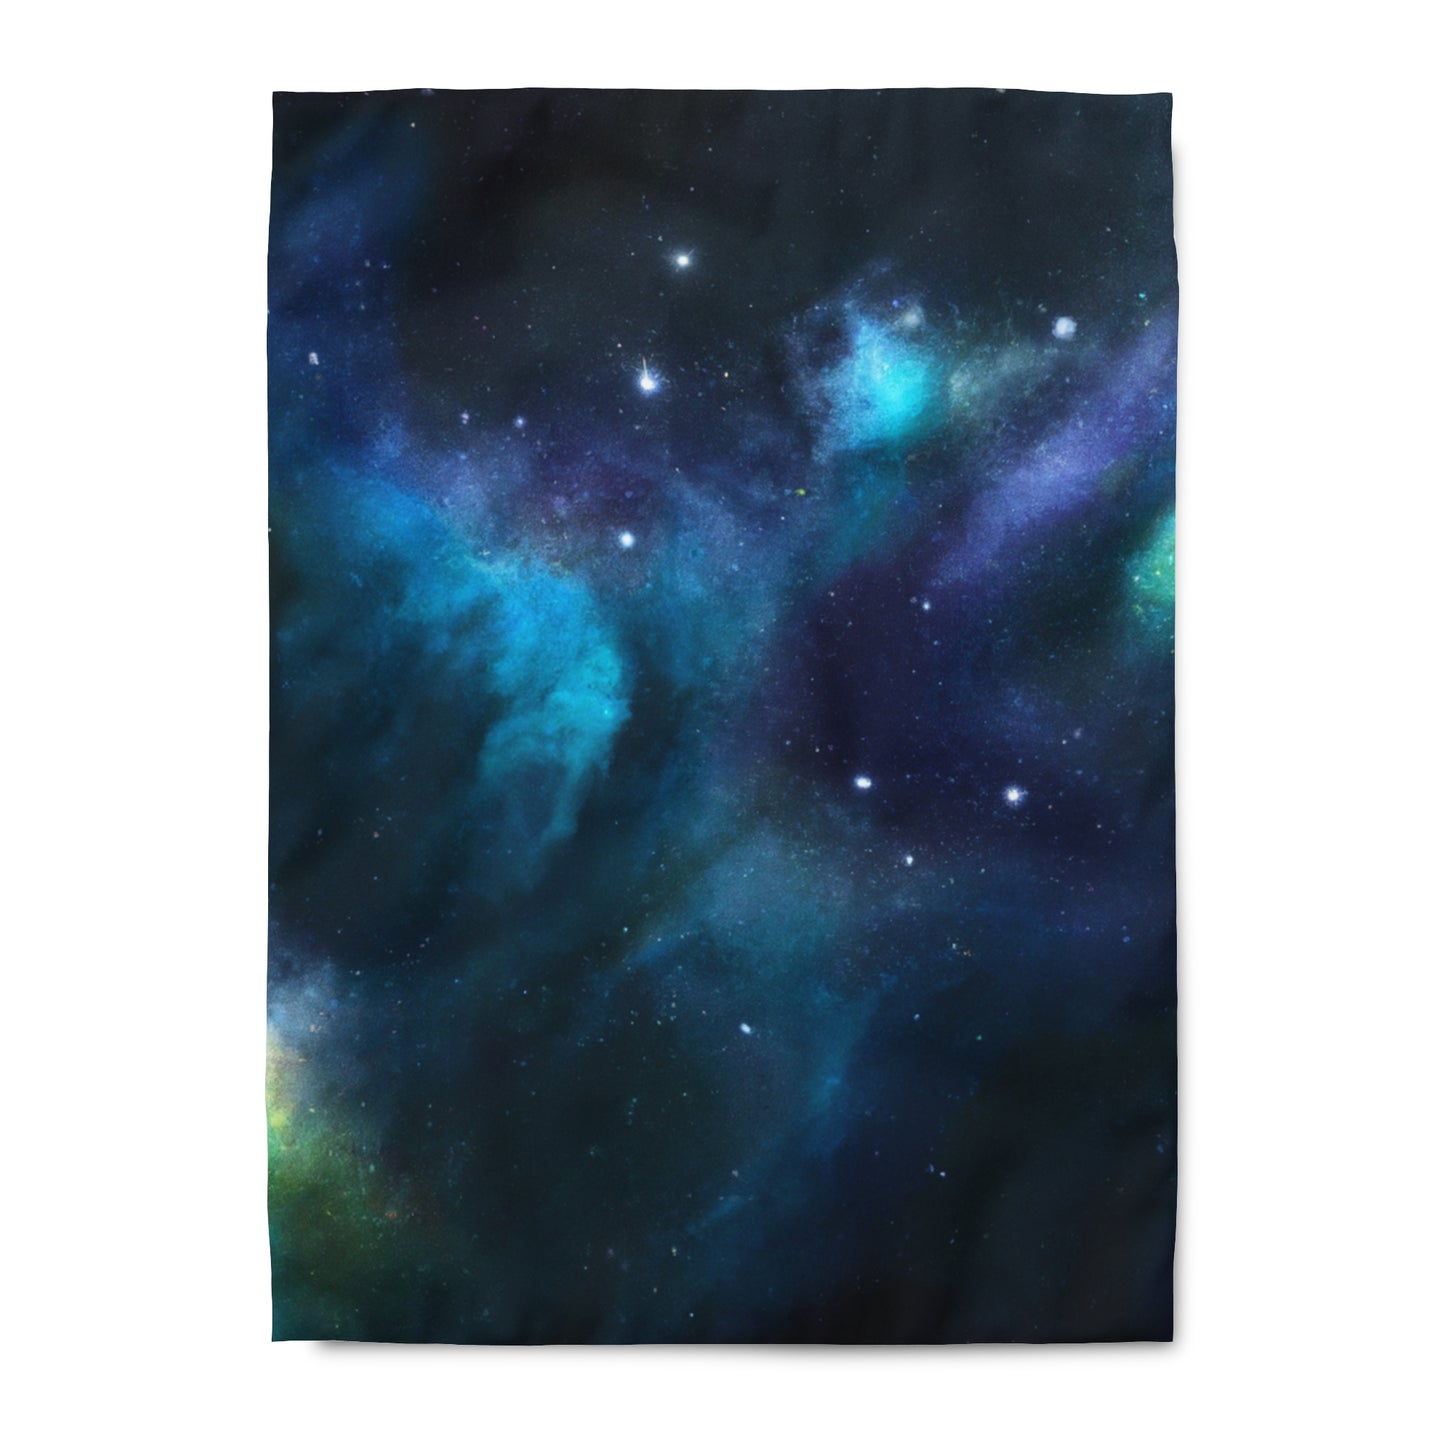 . 

Marilyn Dreamland - Astronomy Duvet Bed Cover